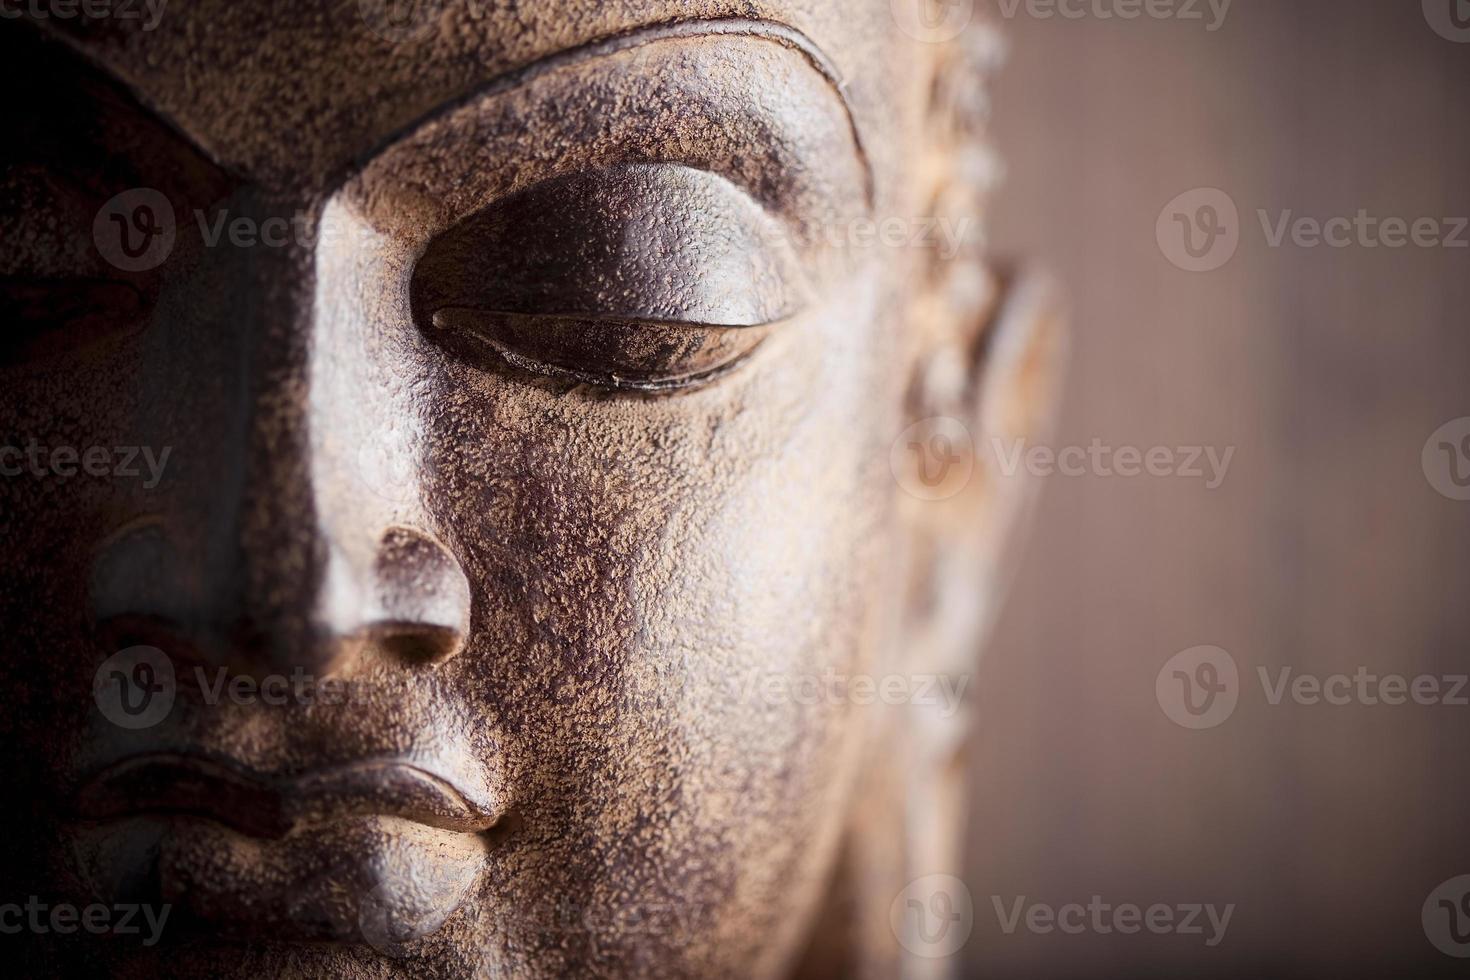 Buddha-Statue foto